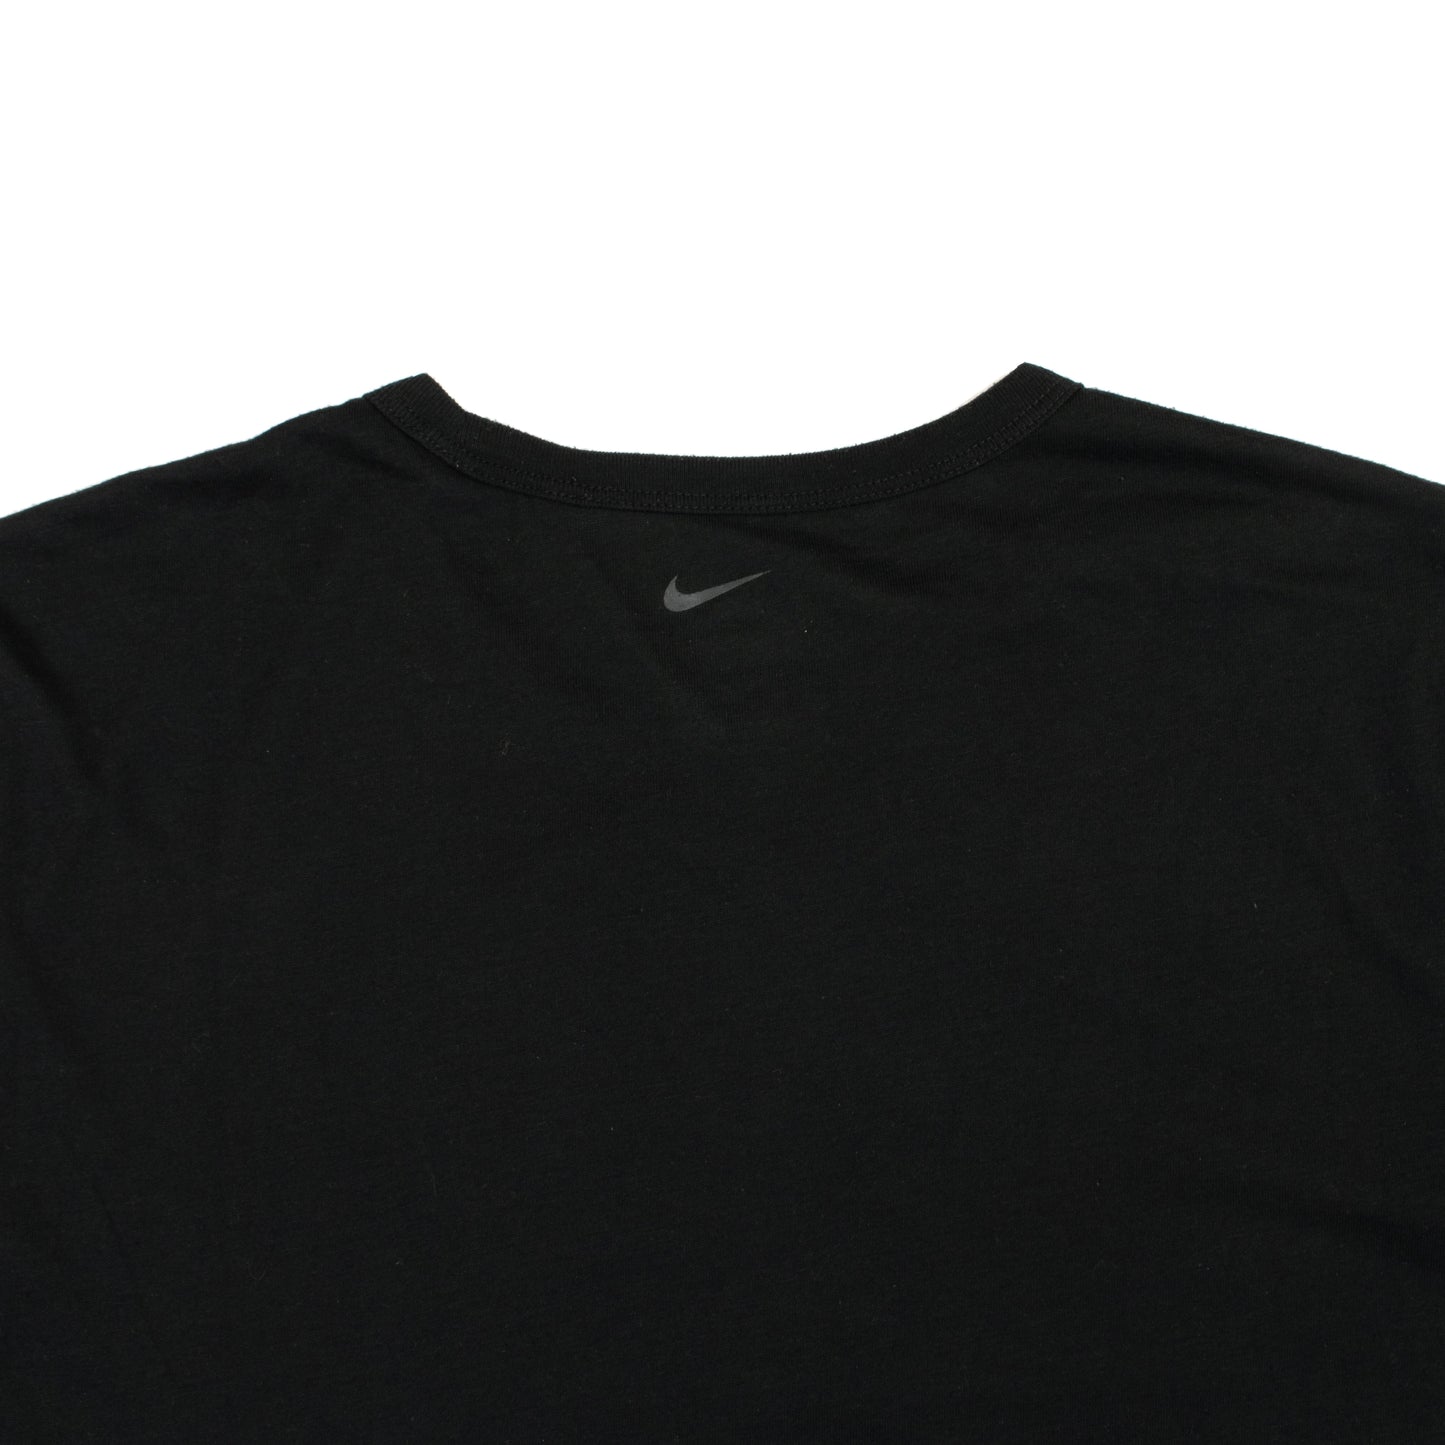 Undercover x Nike Gyakusou Marathon Print Dri-Fit T-Shirt